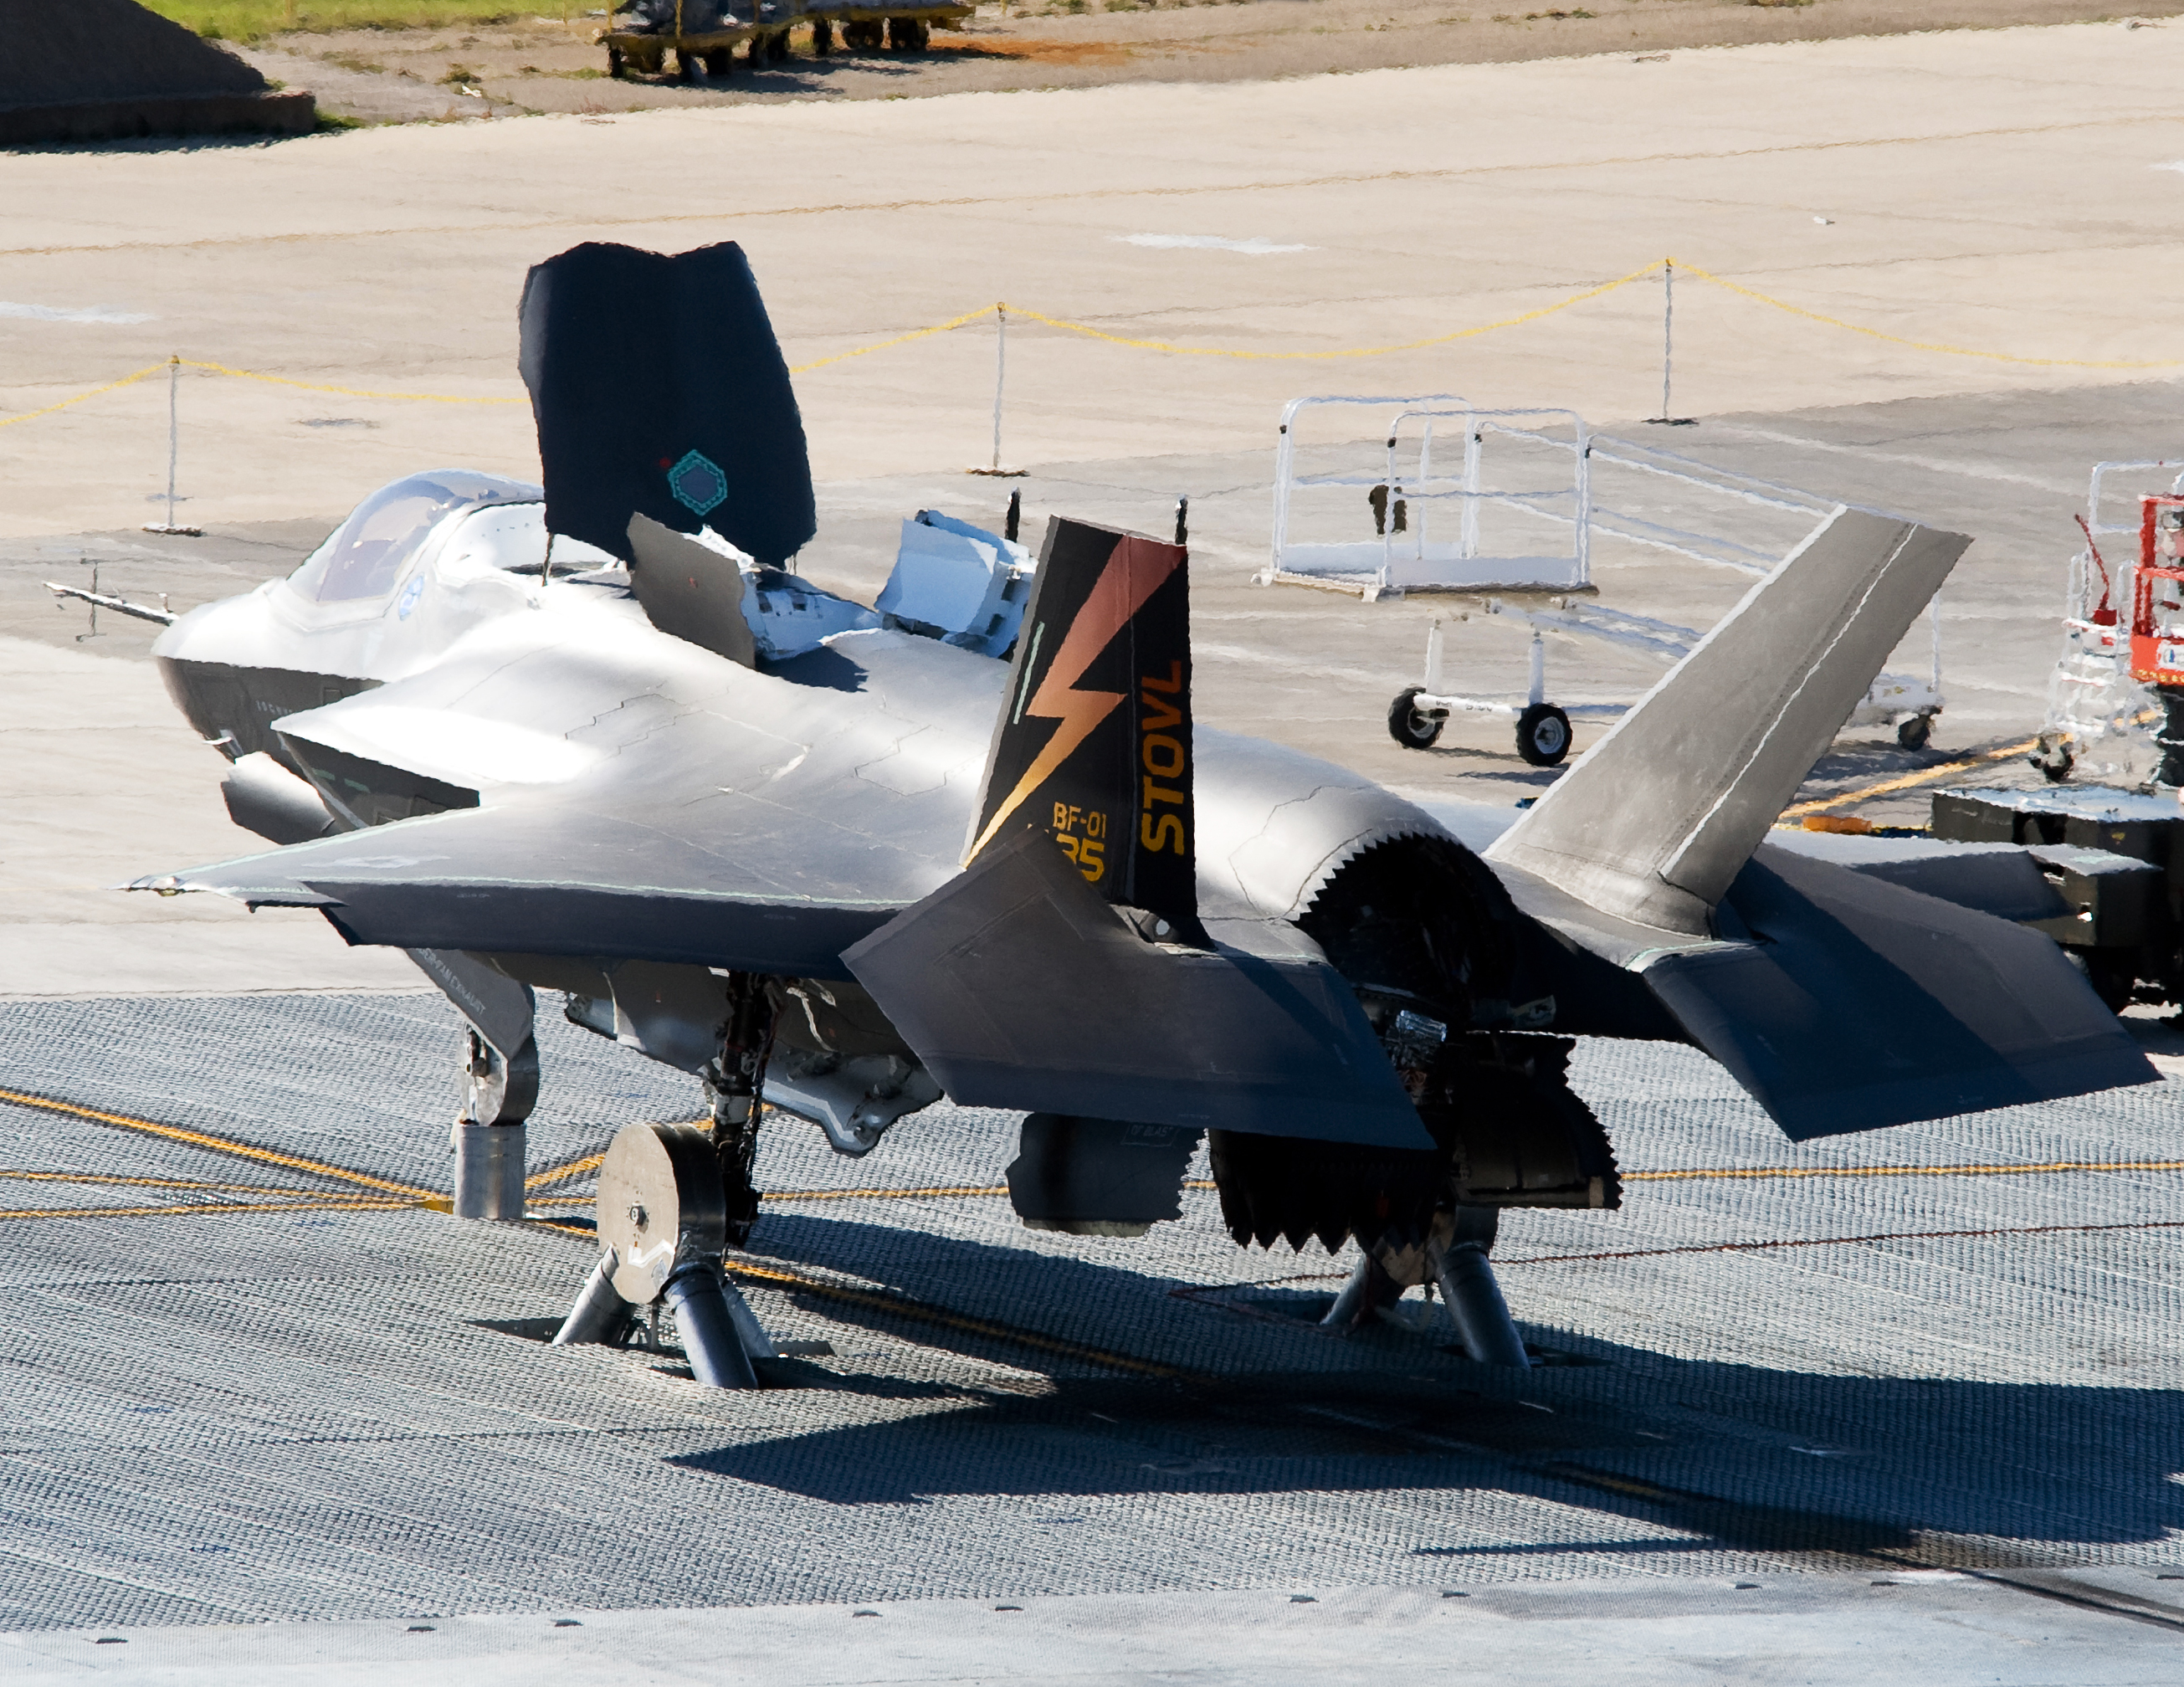 F-35B a tesztelés során (fotó: justinwrites.files.wordpress.com)